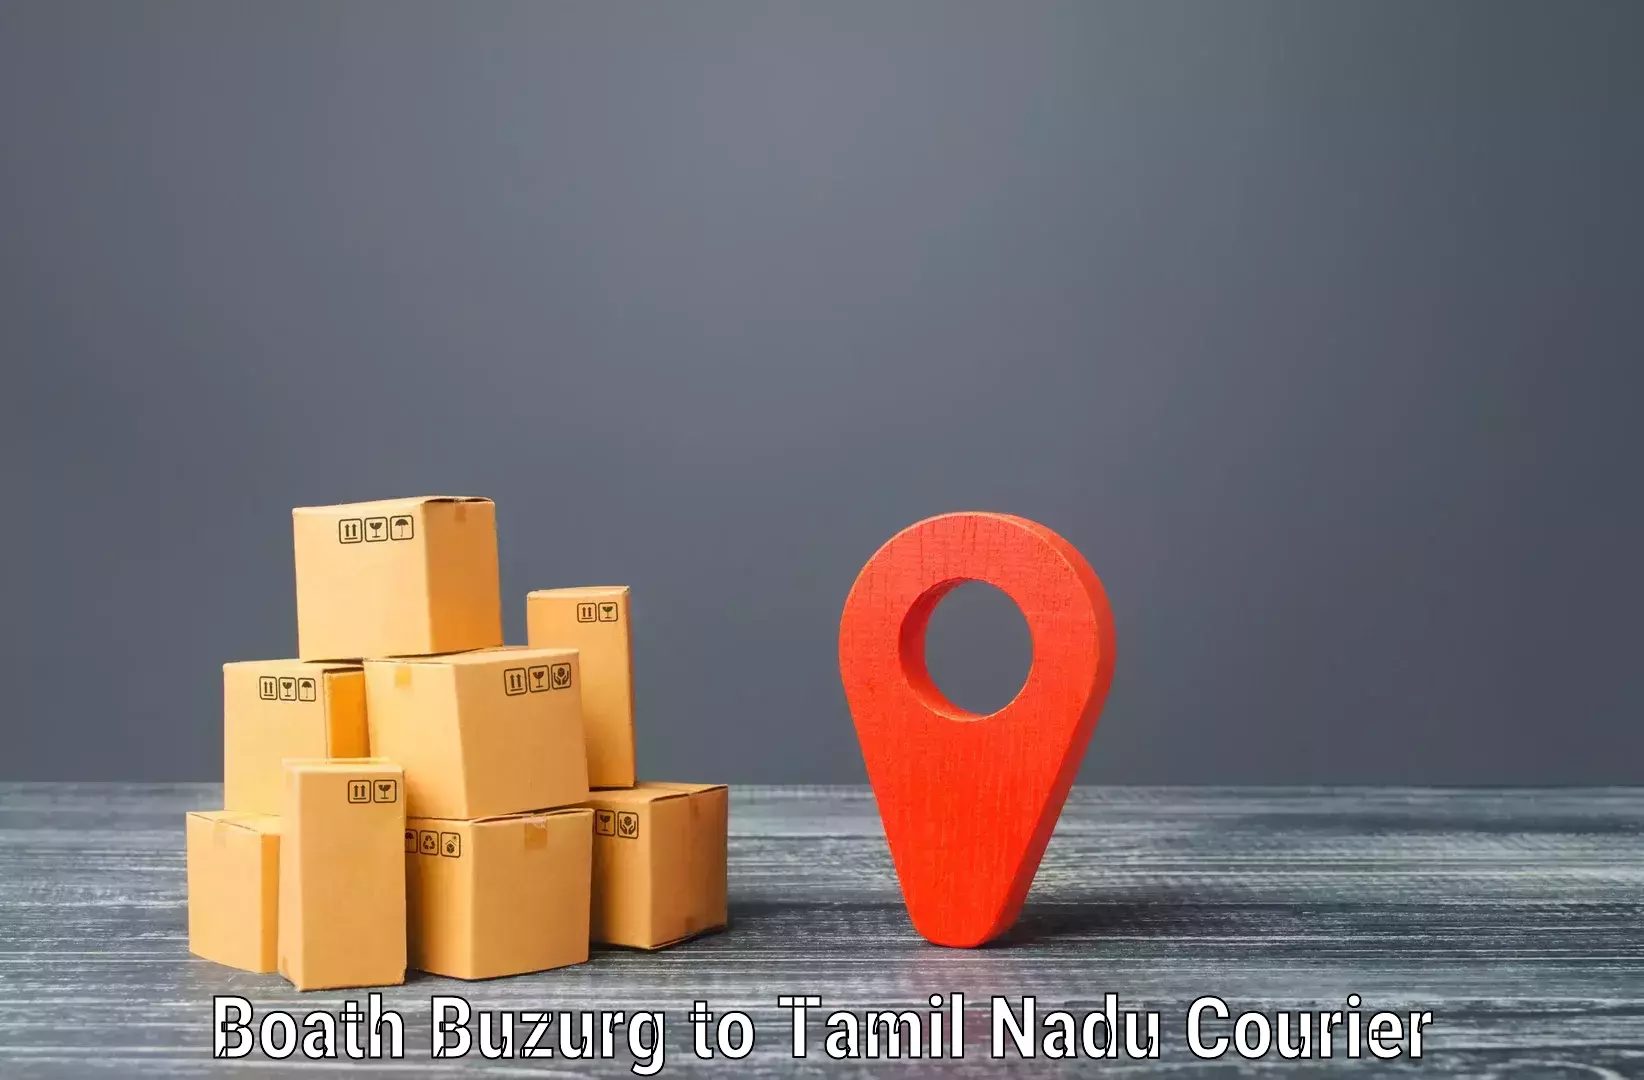 Express mail service Boath Buzurg to Tamil Nadu